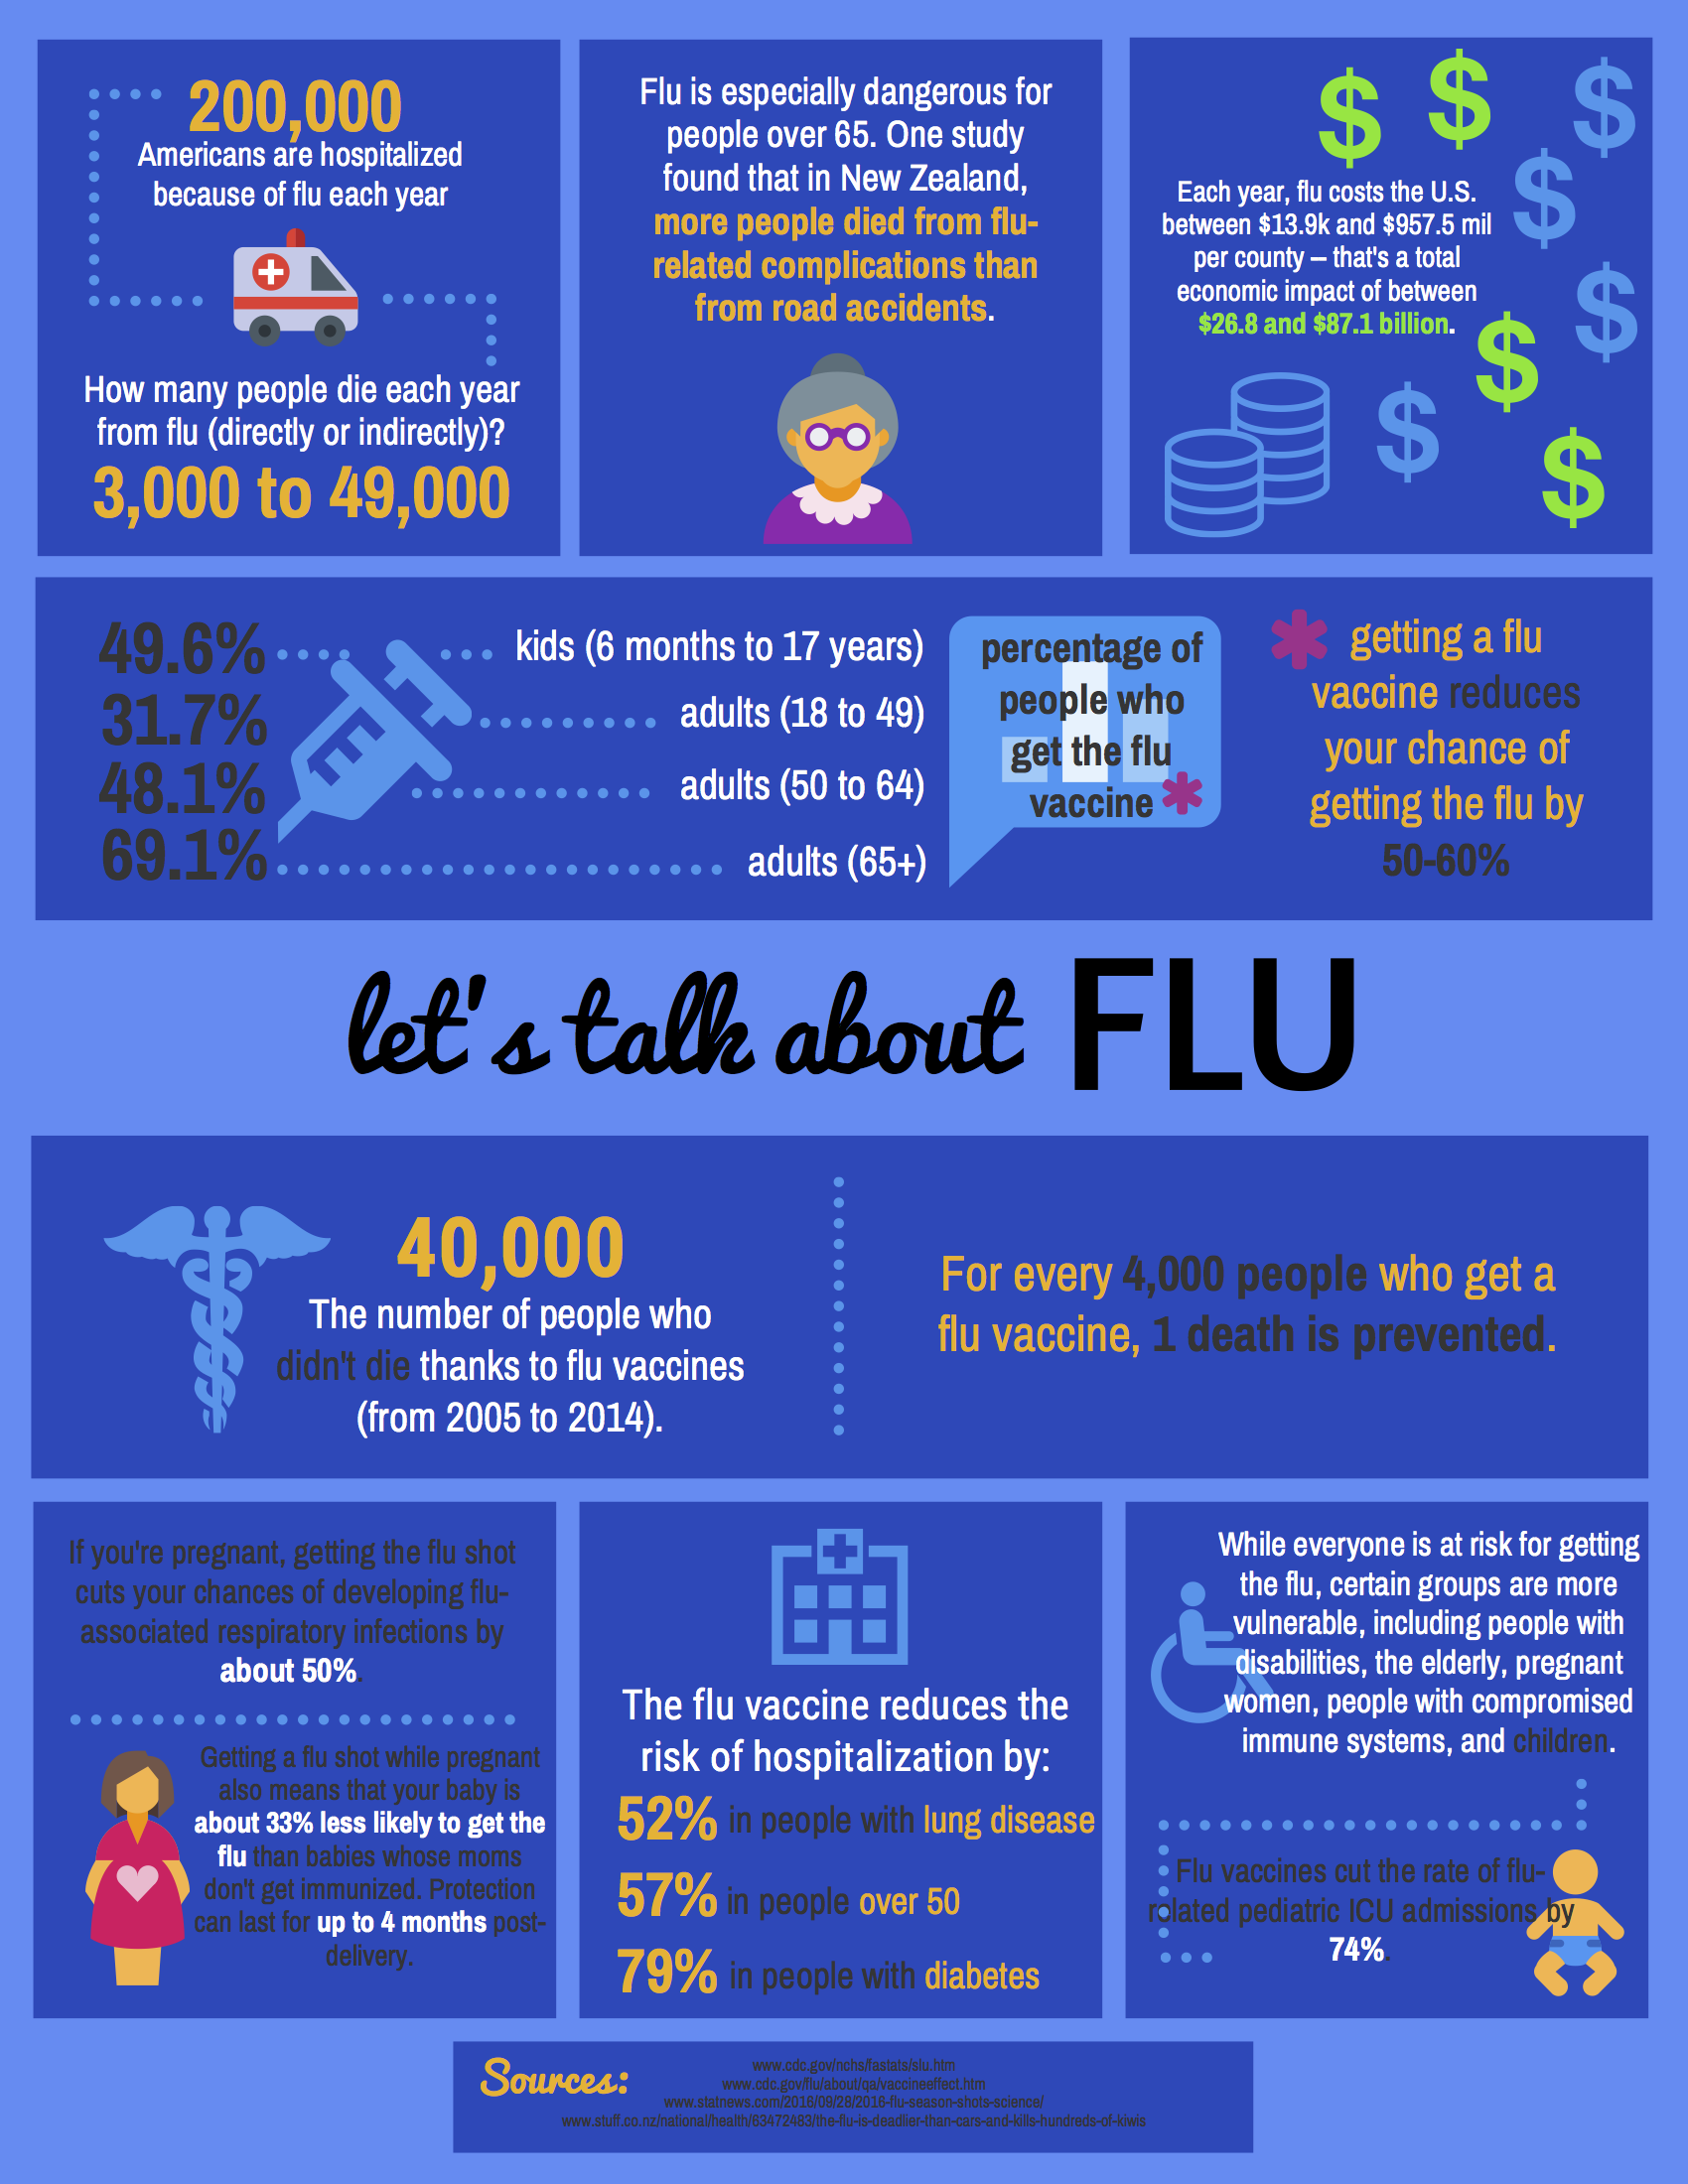 Let’s talk about FLU